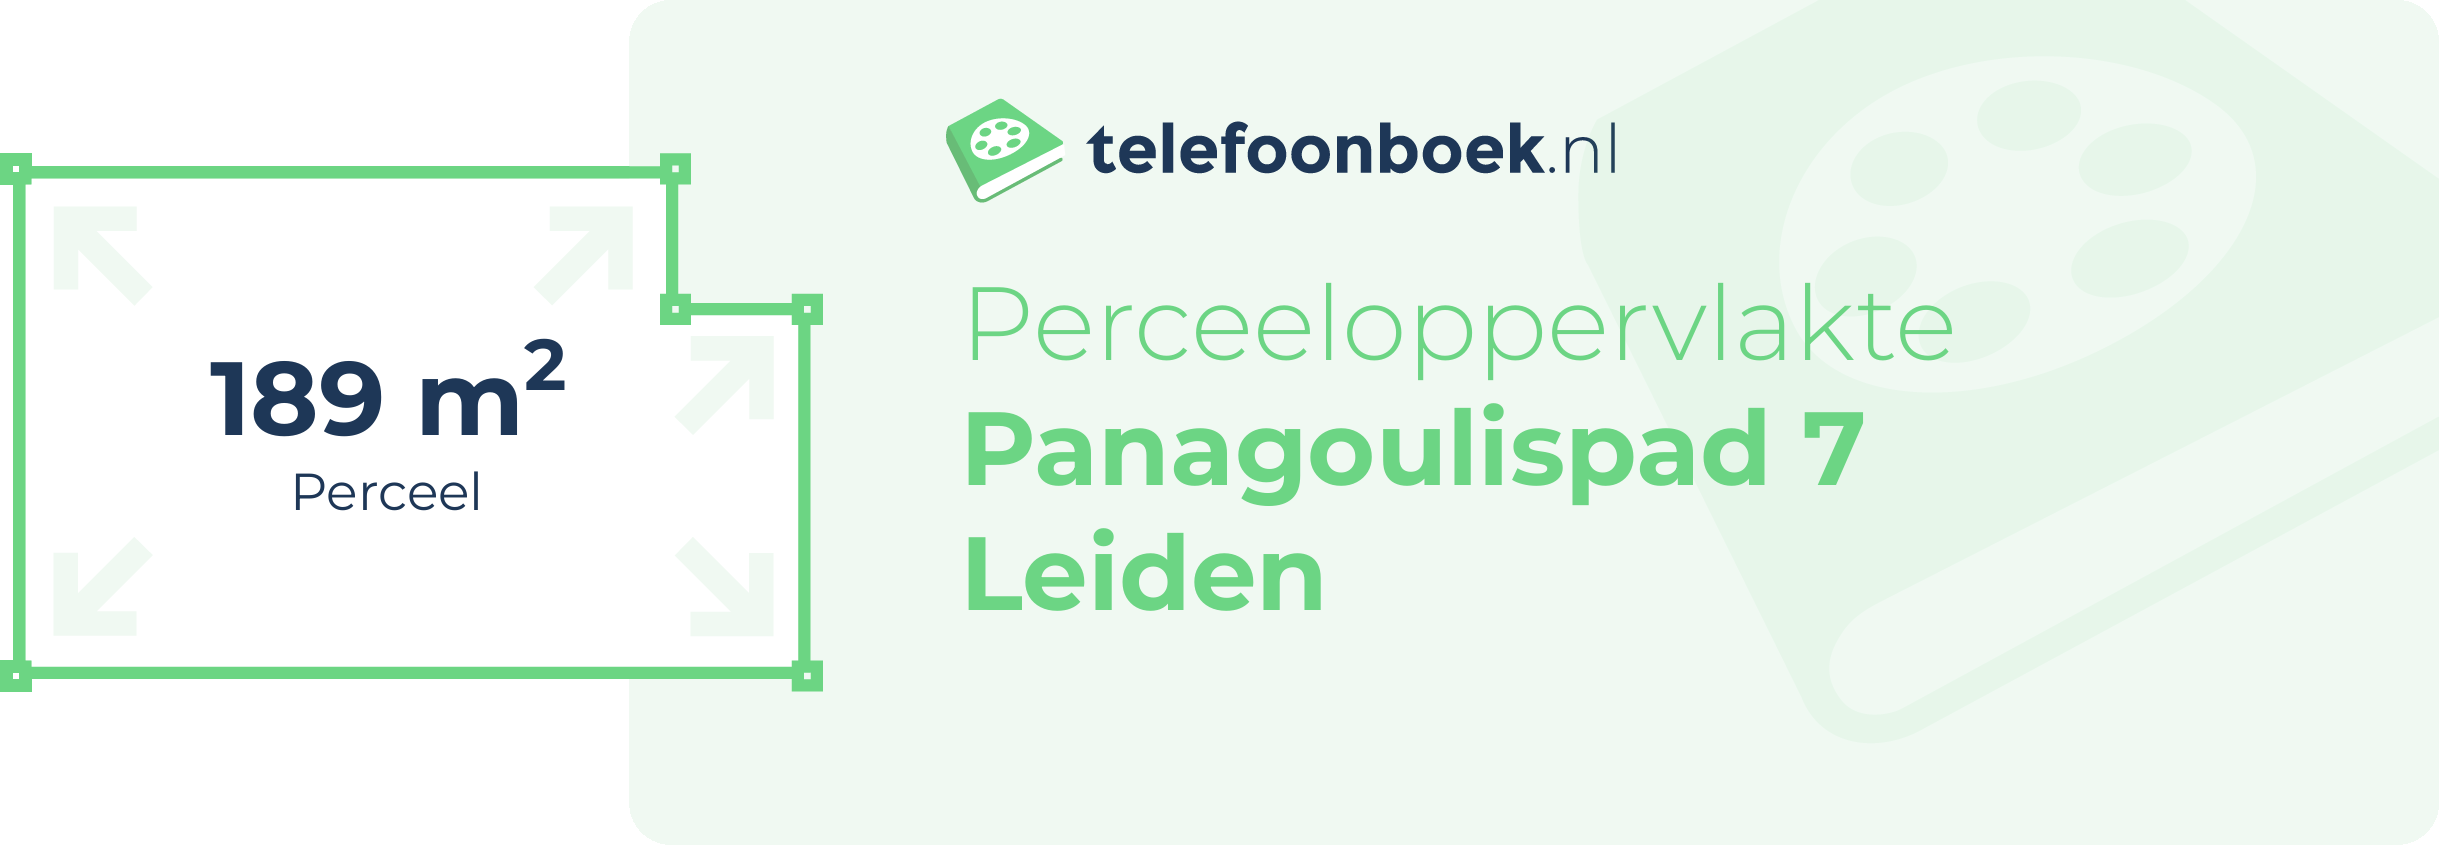 Perceeloppervlakte Panagoulispad 7 Leiden